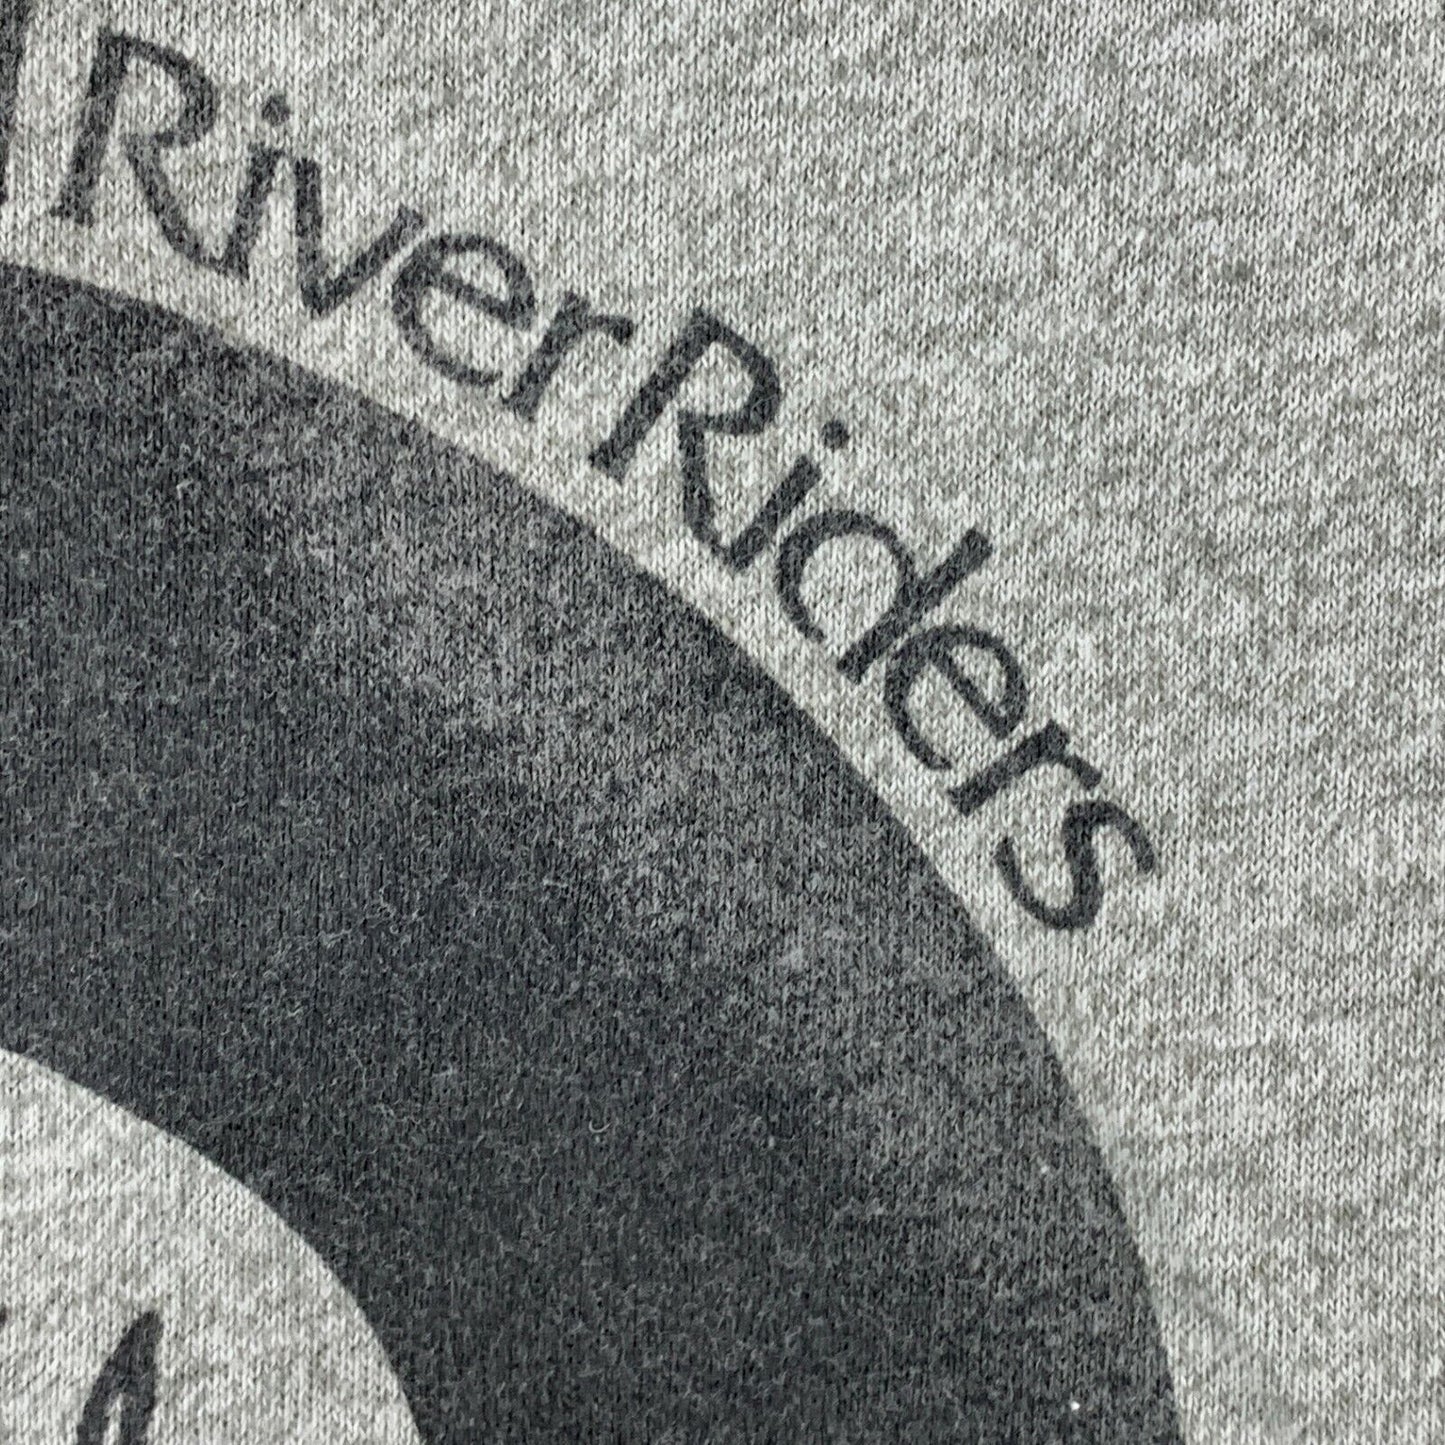 The Comal River Tube Riders Vintage 80s T Shirt Large Tubing Texas USA Mens Gray